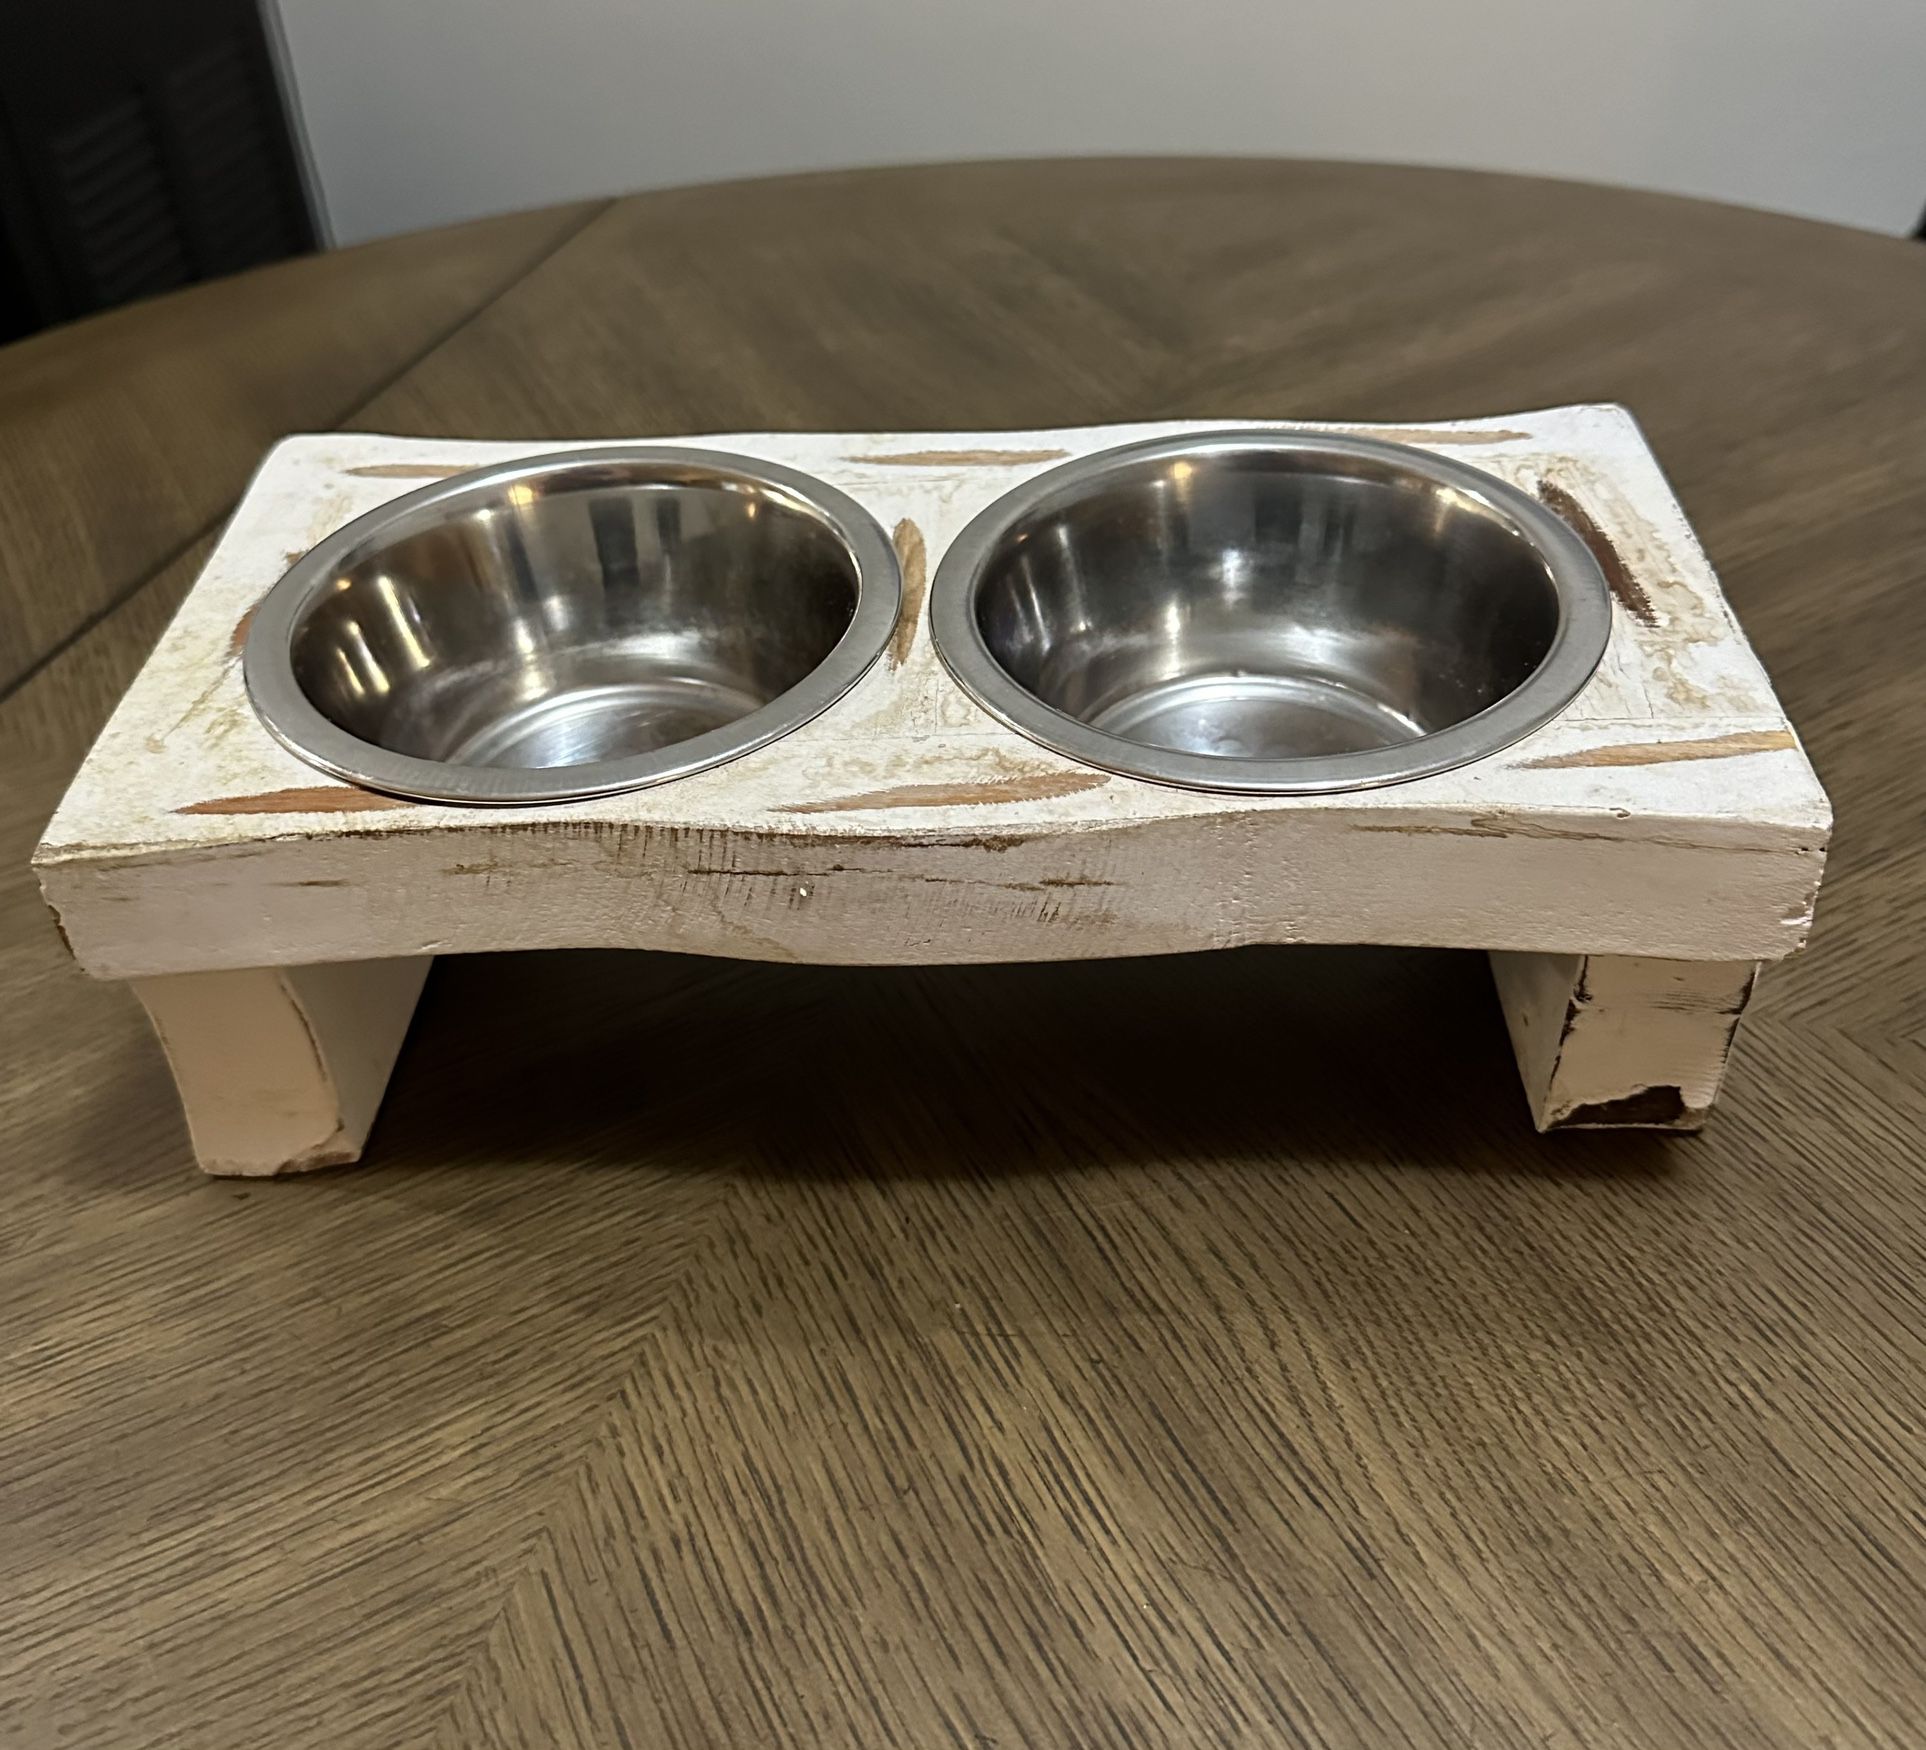 Rustic Small Dog Food/water Dish Set (12”w x 6”d x 4”h)